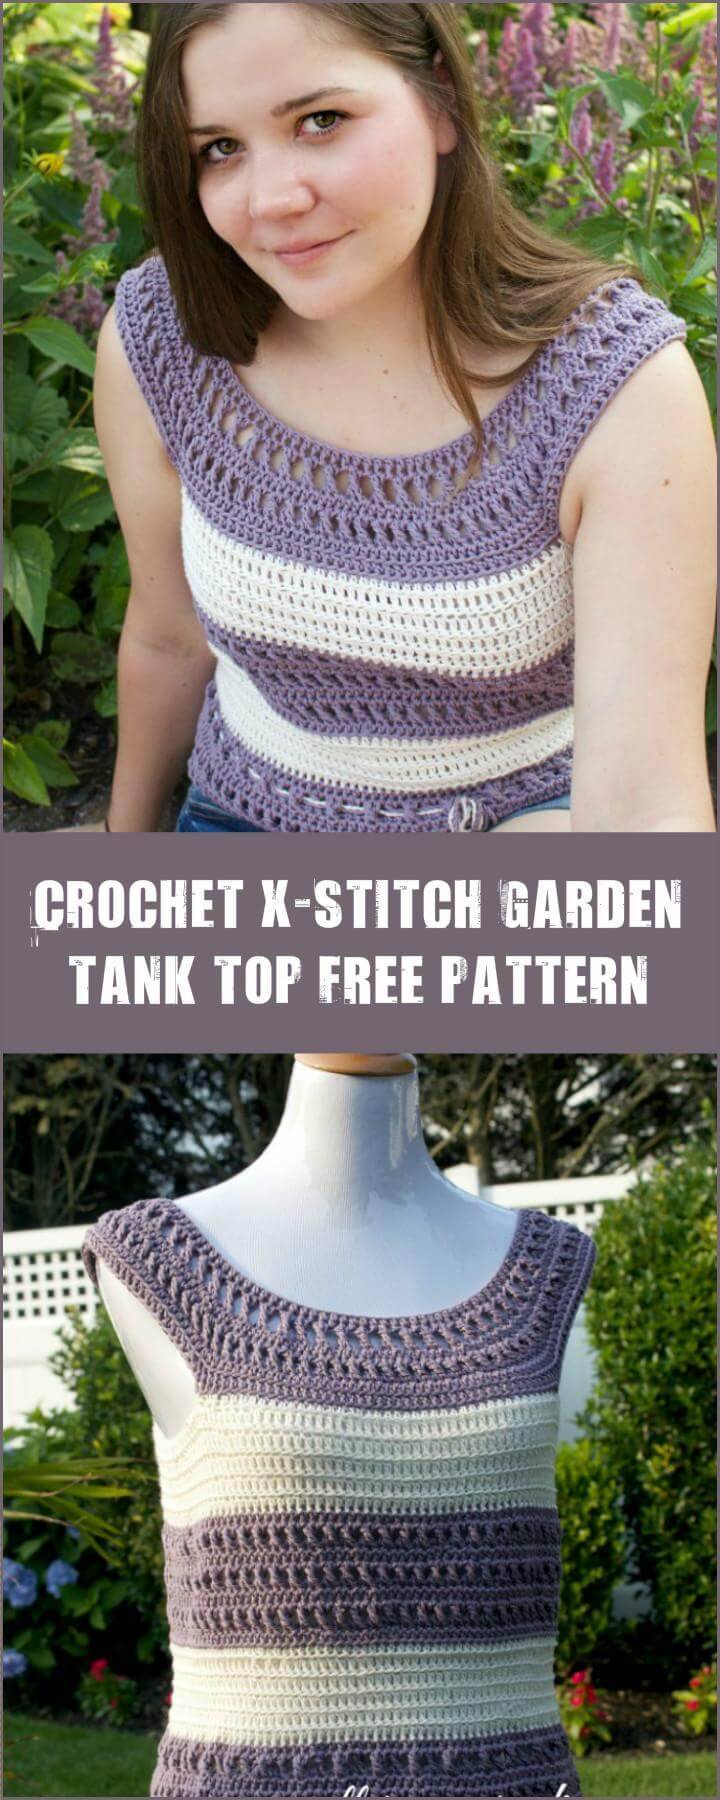 Crochet X-Stitch Garden Tank Top Free Pattern